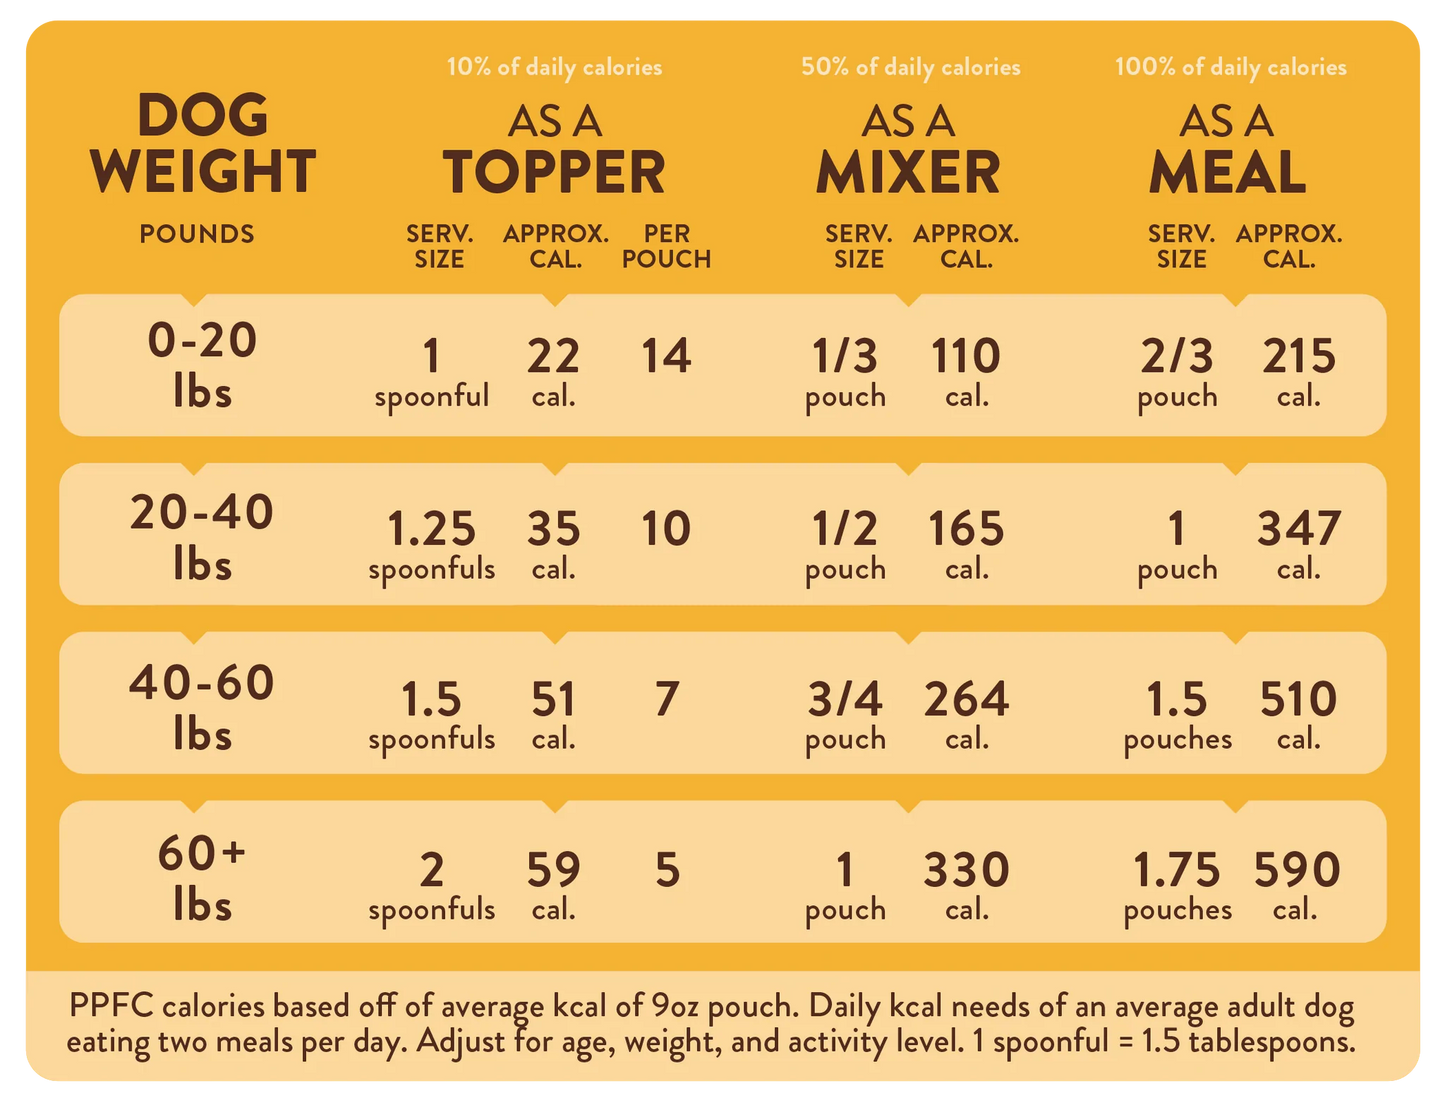 Portland Pet Food Company Grandma Ada's Turkey & Yams Holiday 9-Oz Pouch Wet Dog Food